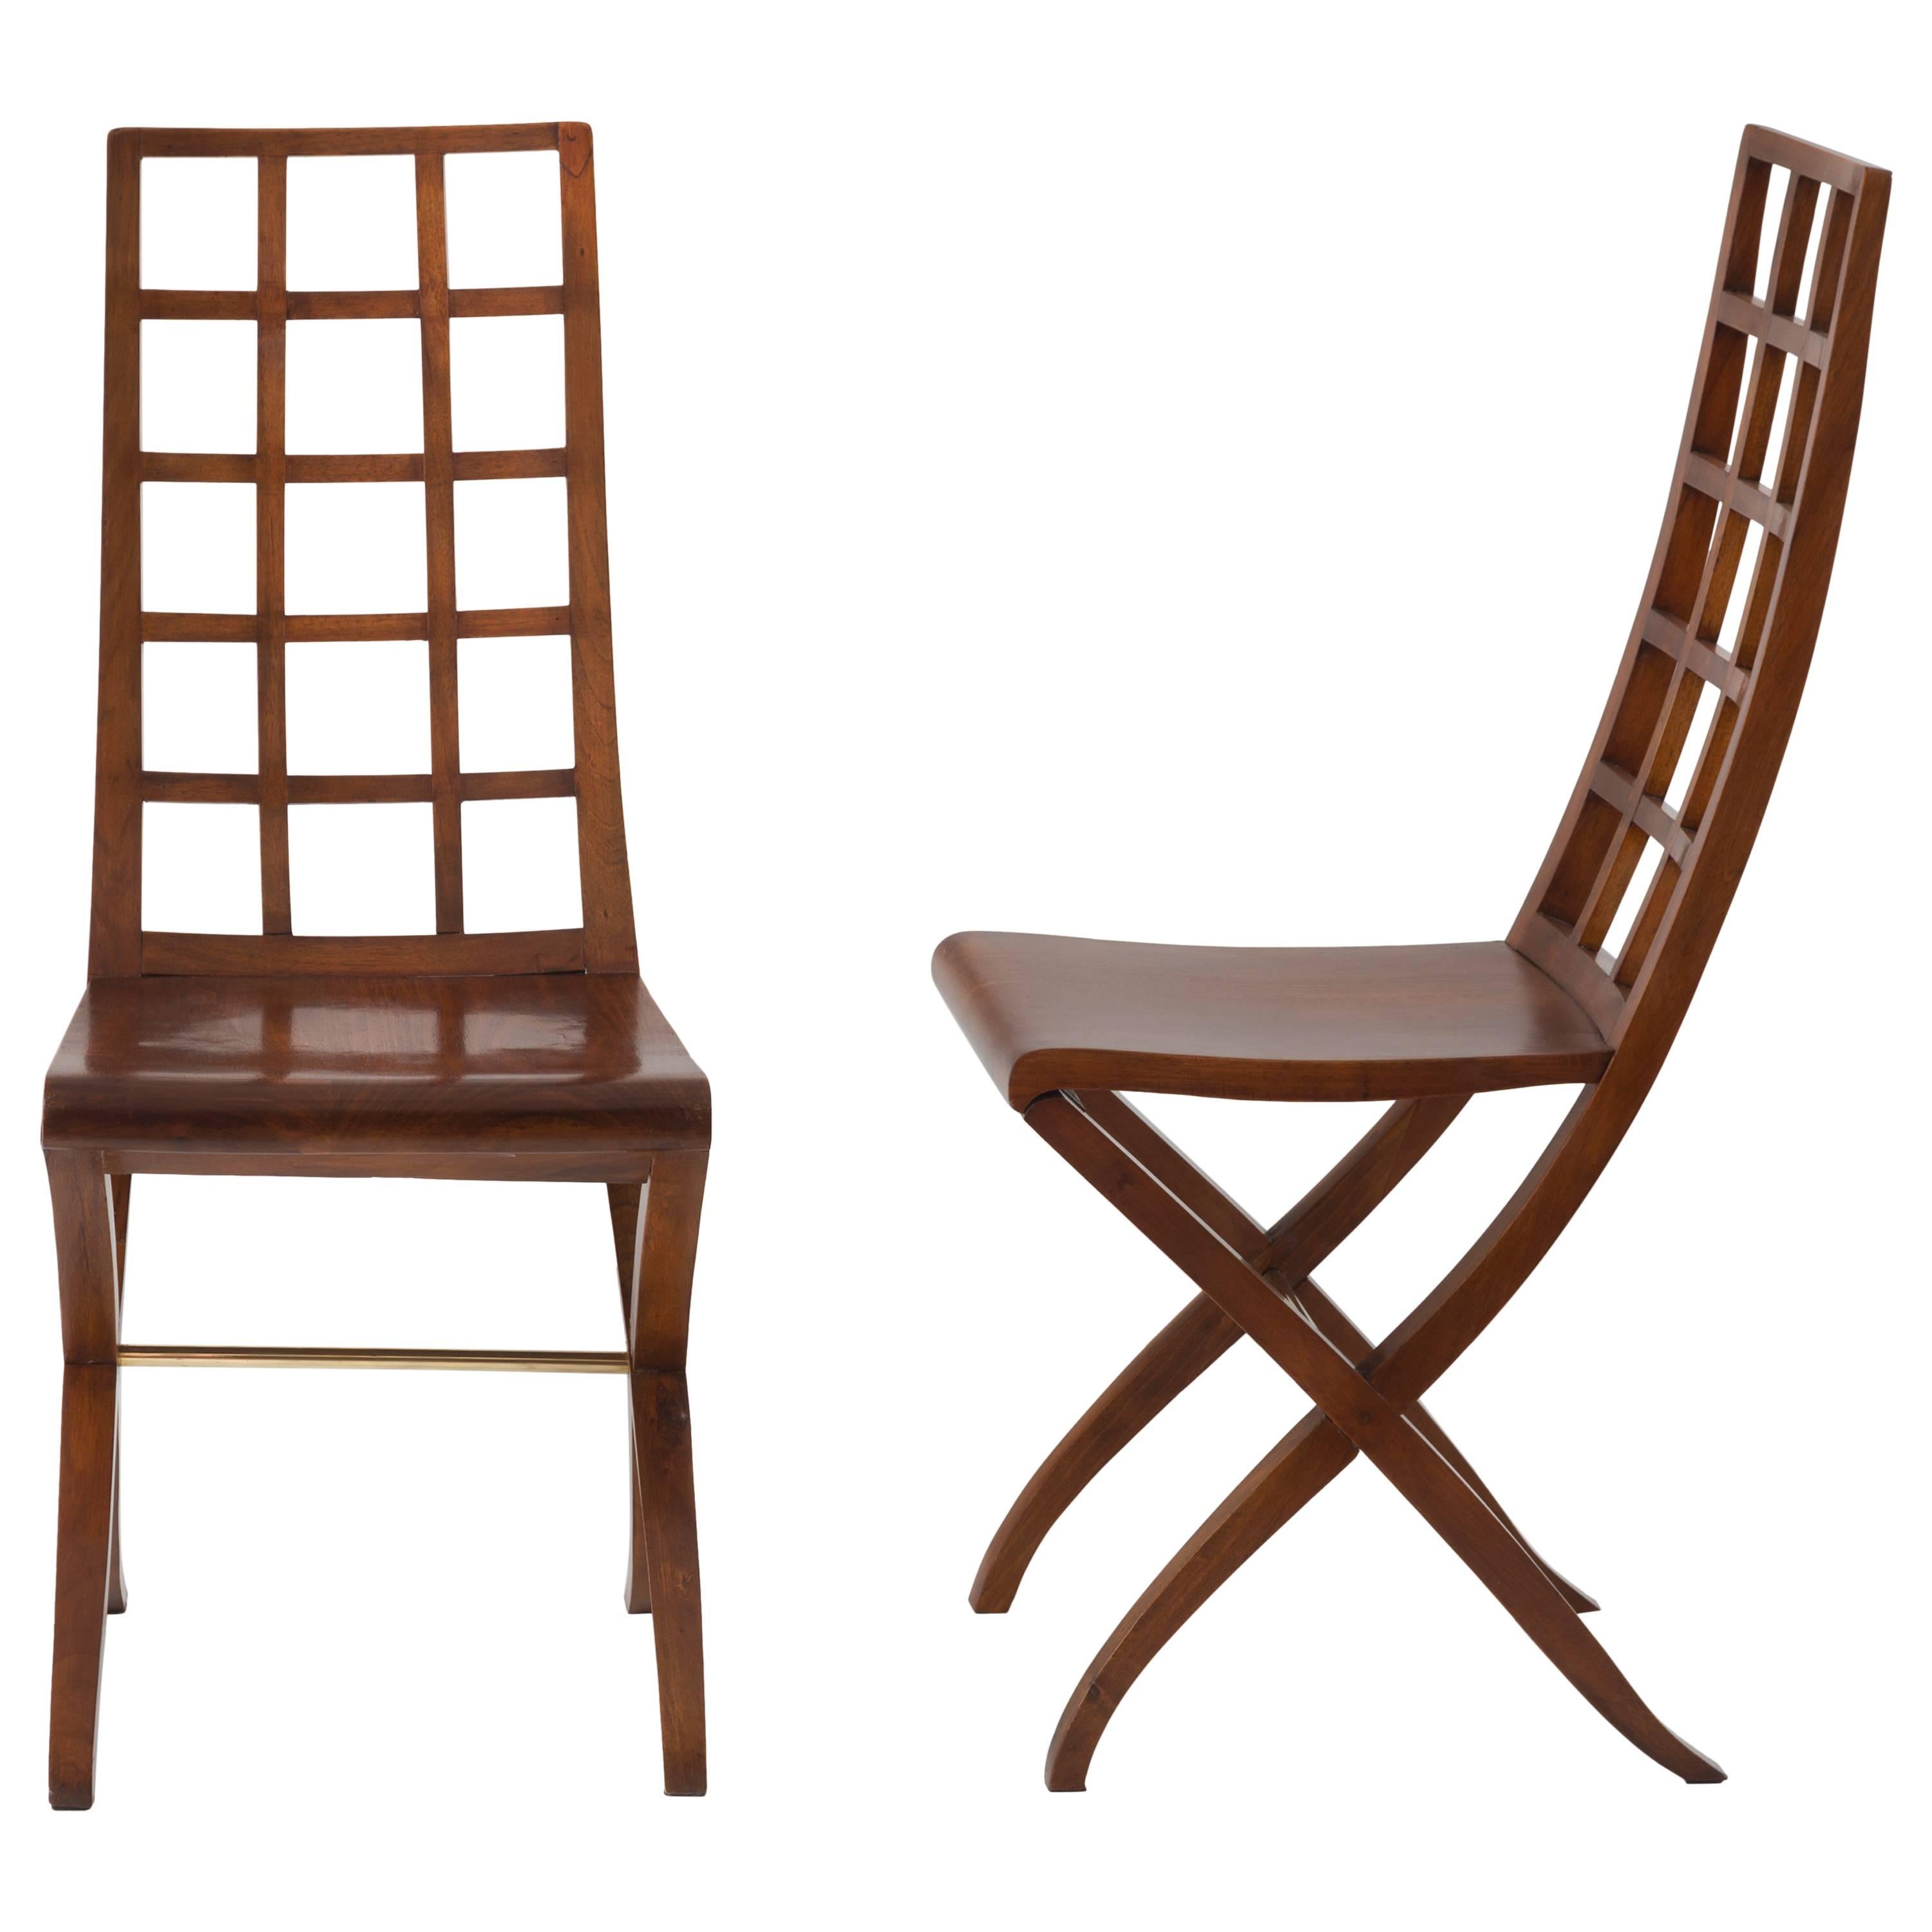 Pair of Maurizio Tempestini Sculptural Chairs, 1940